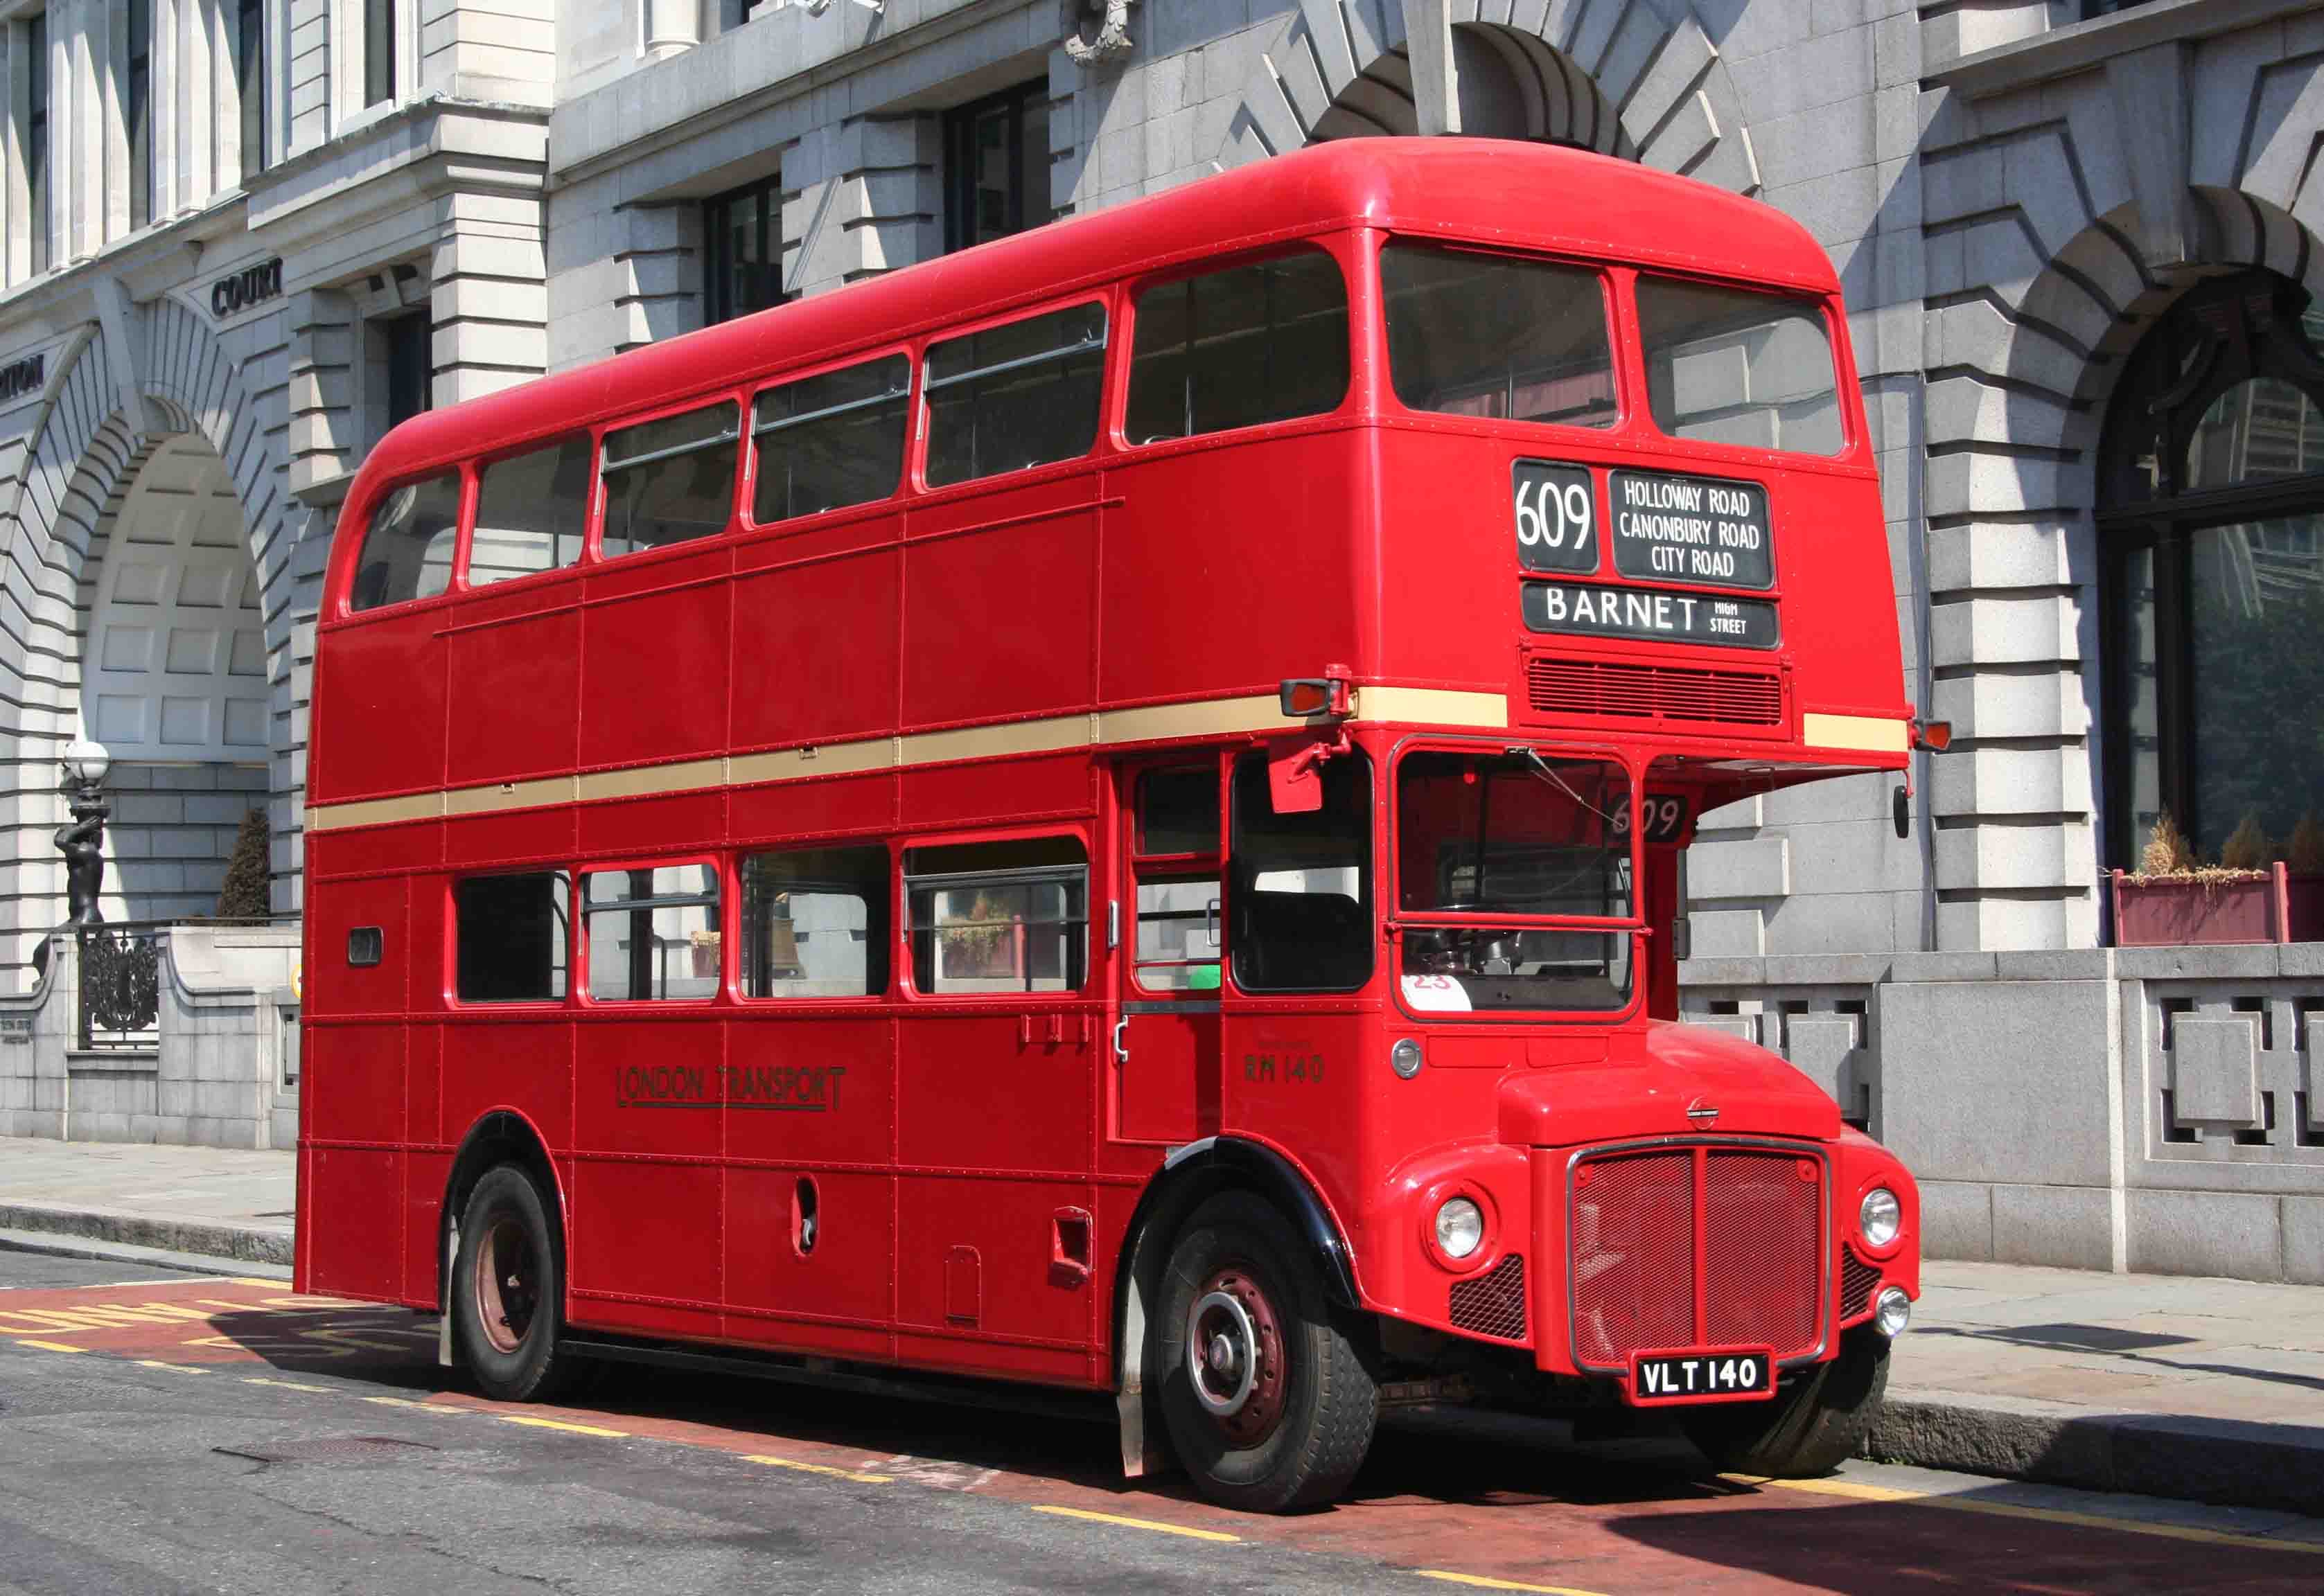 1959 AEC Routemaster bus â€“ RM140 - London Bus Museum